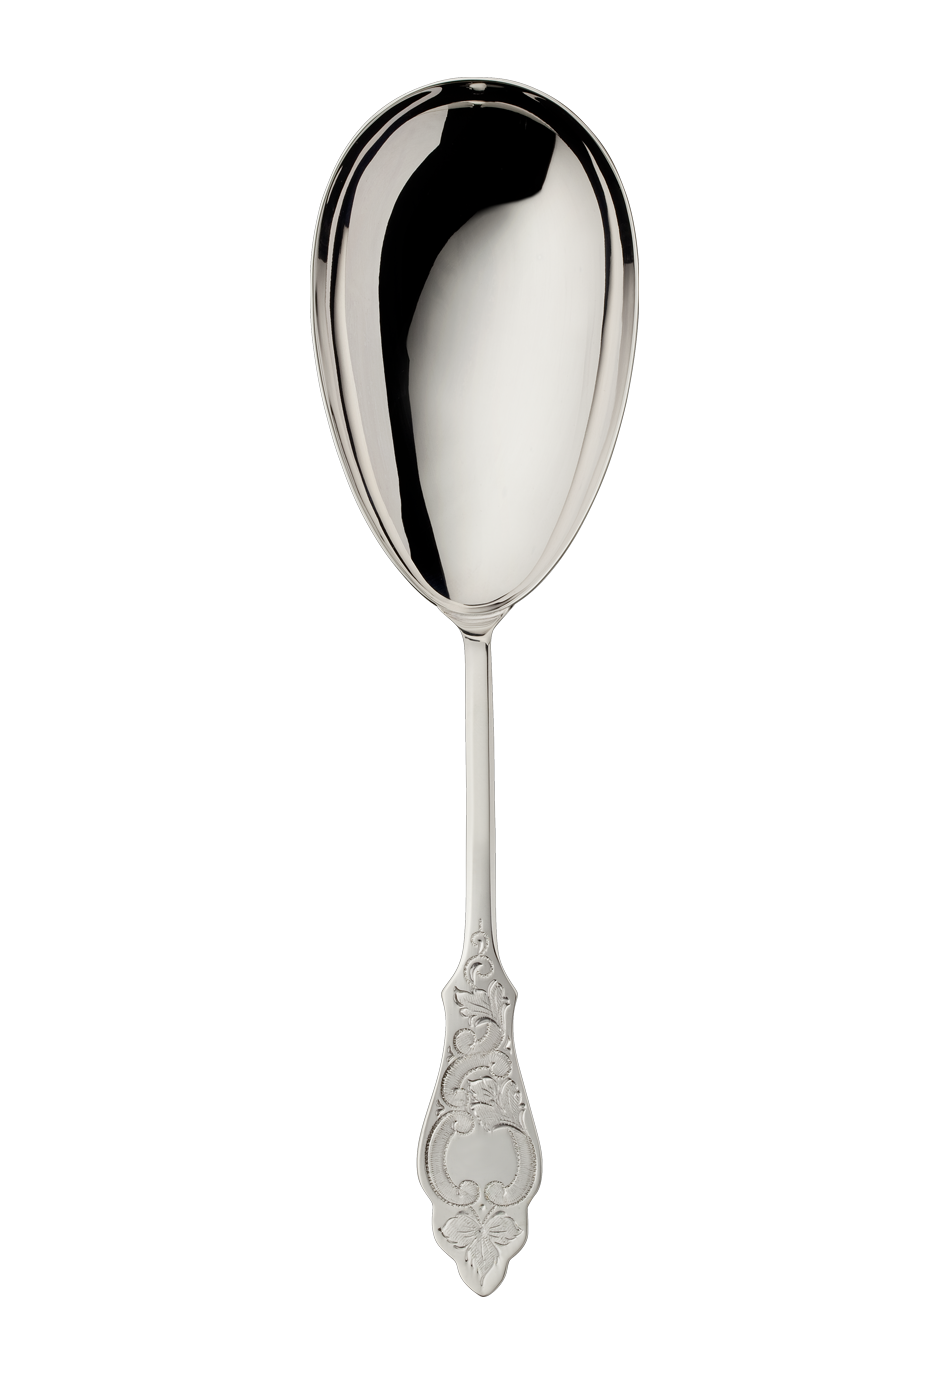 Ostfriesen Serving Spoon (150g massive silverplated)